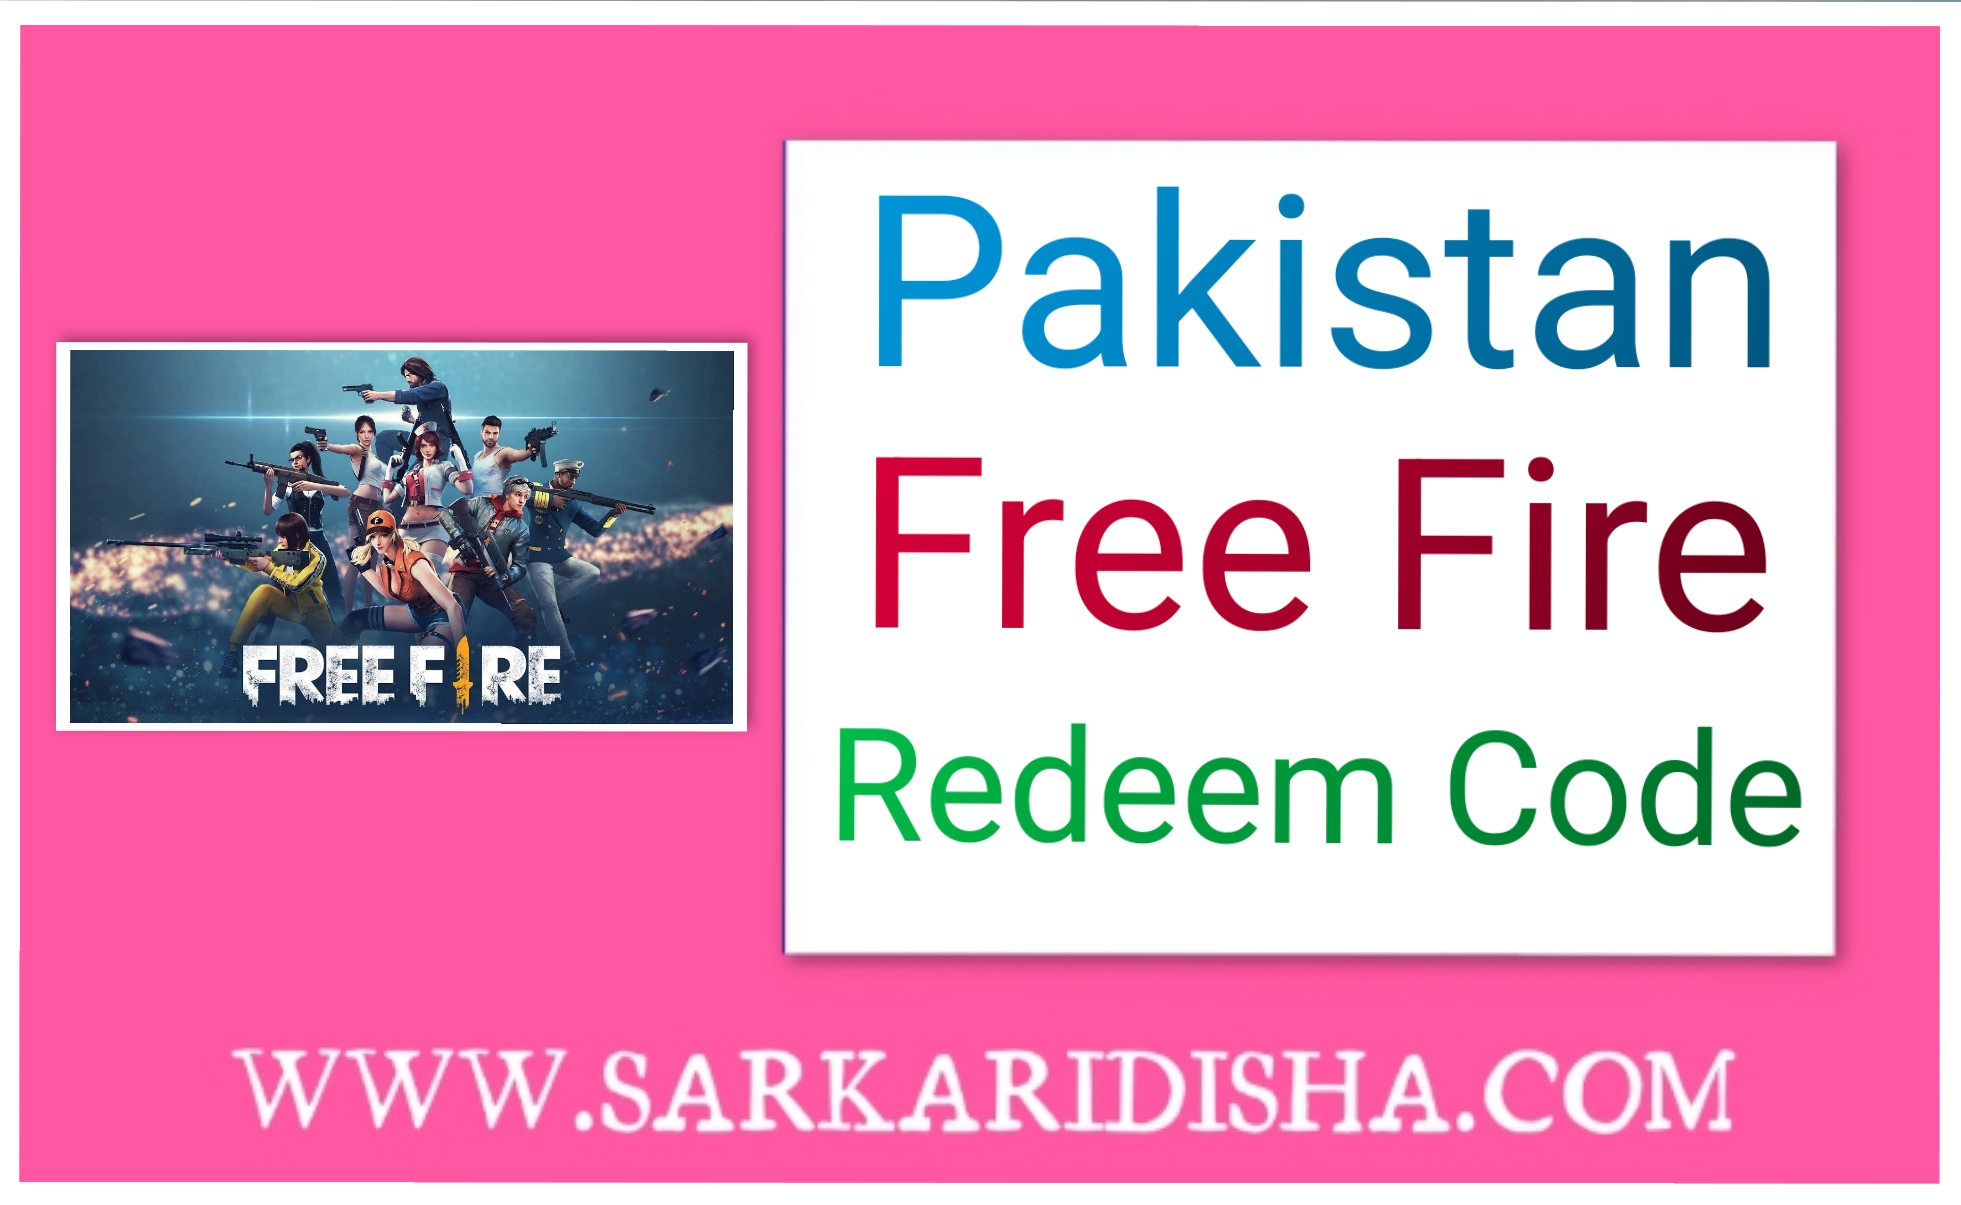 Free Fire redeem codes December 2023